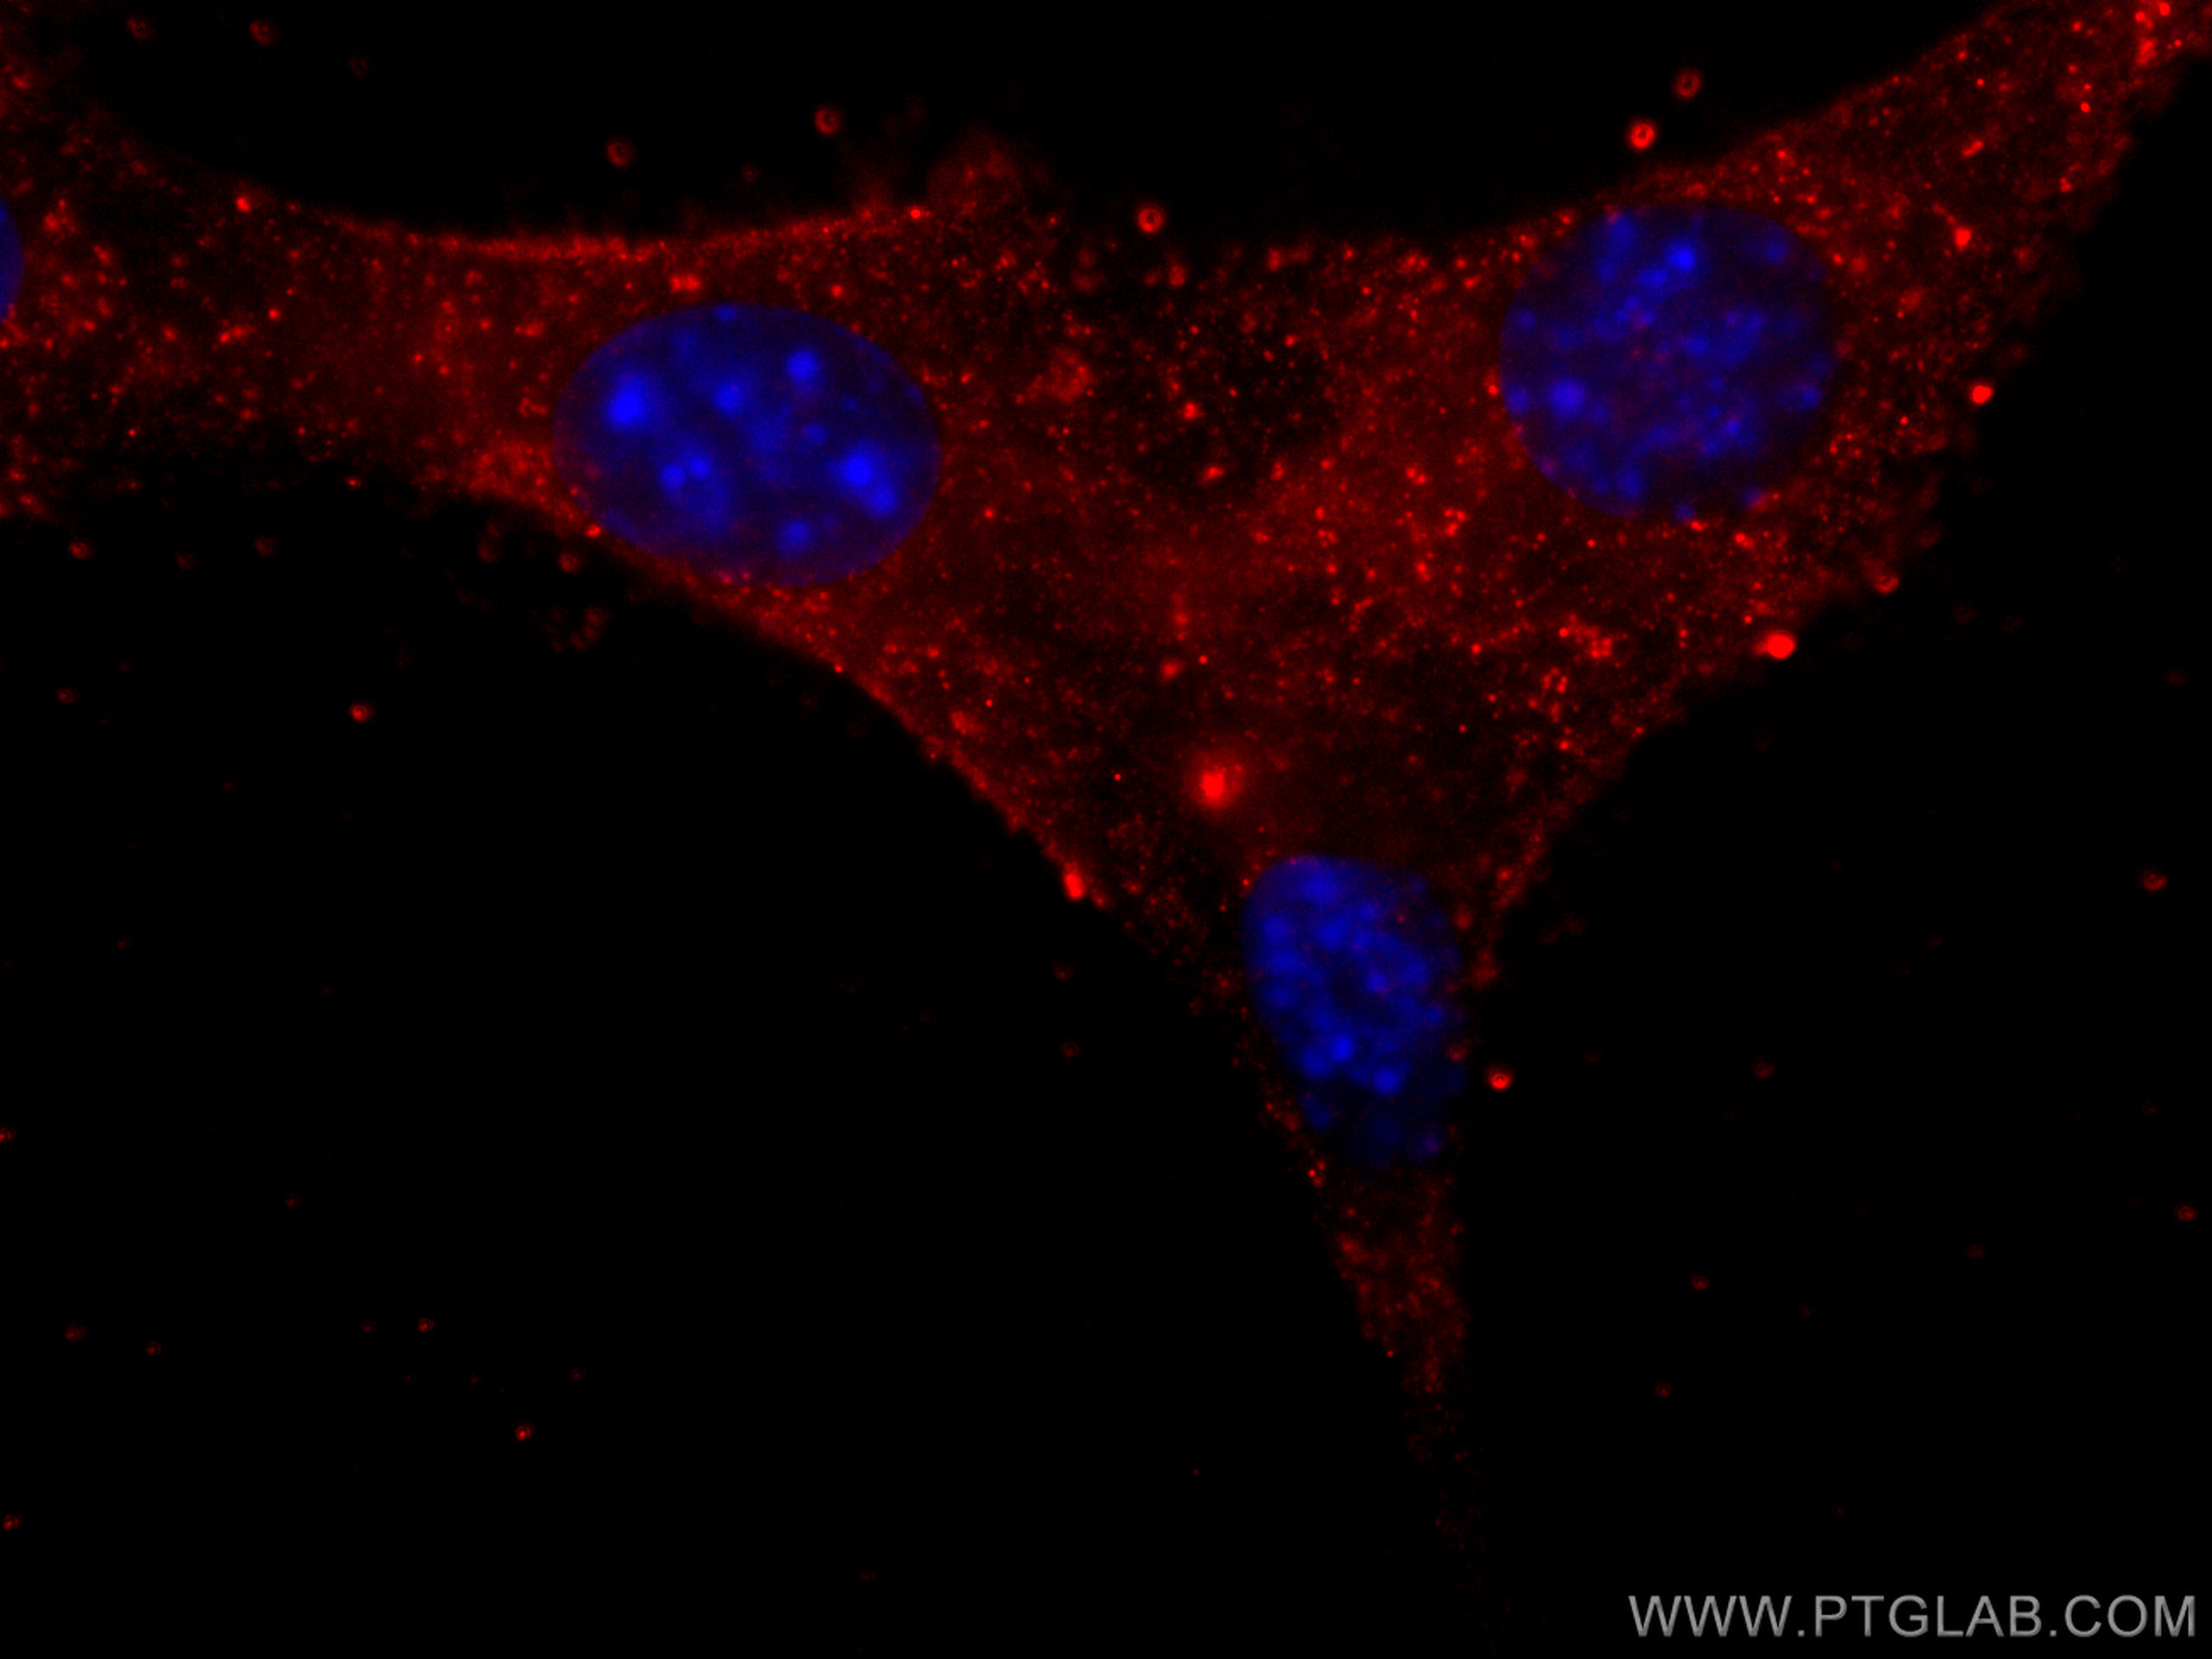 Myosin Heavy Chain Antibody (Clone# MF20): R&D Systems, 47% OFF